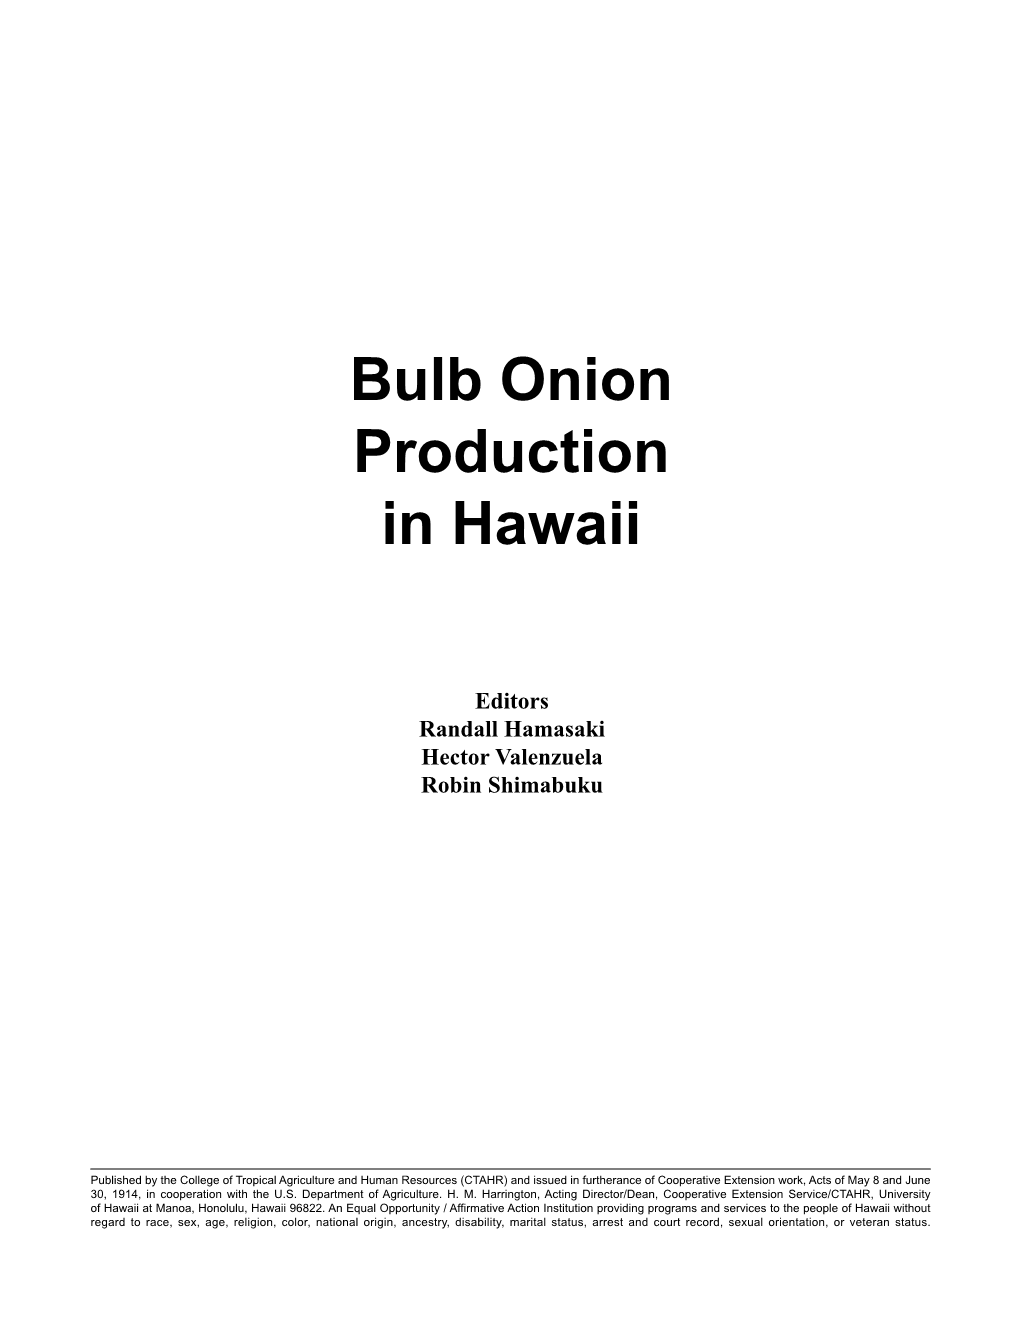 Bulb Onion Production in Hawaii